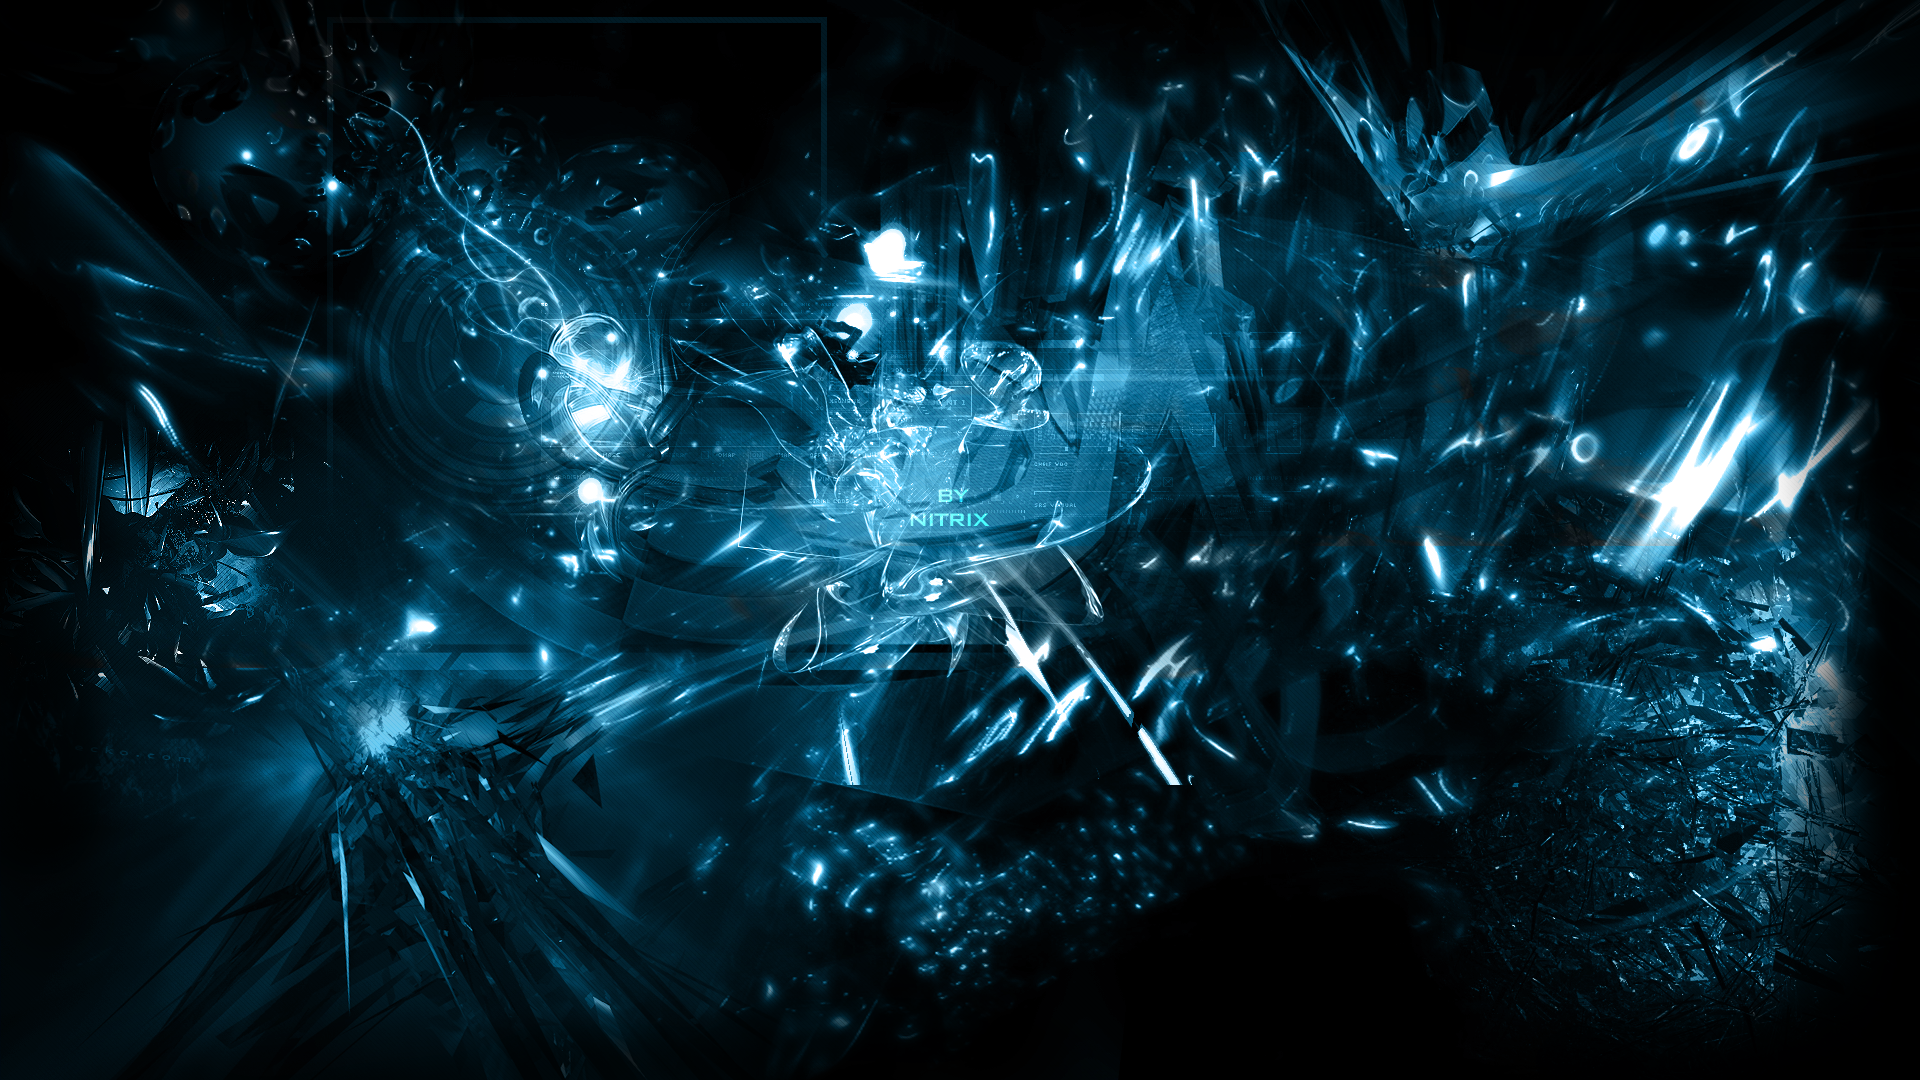 Space Abstract Wallpaper By Nitr1x Digital Art Mixed Media